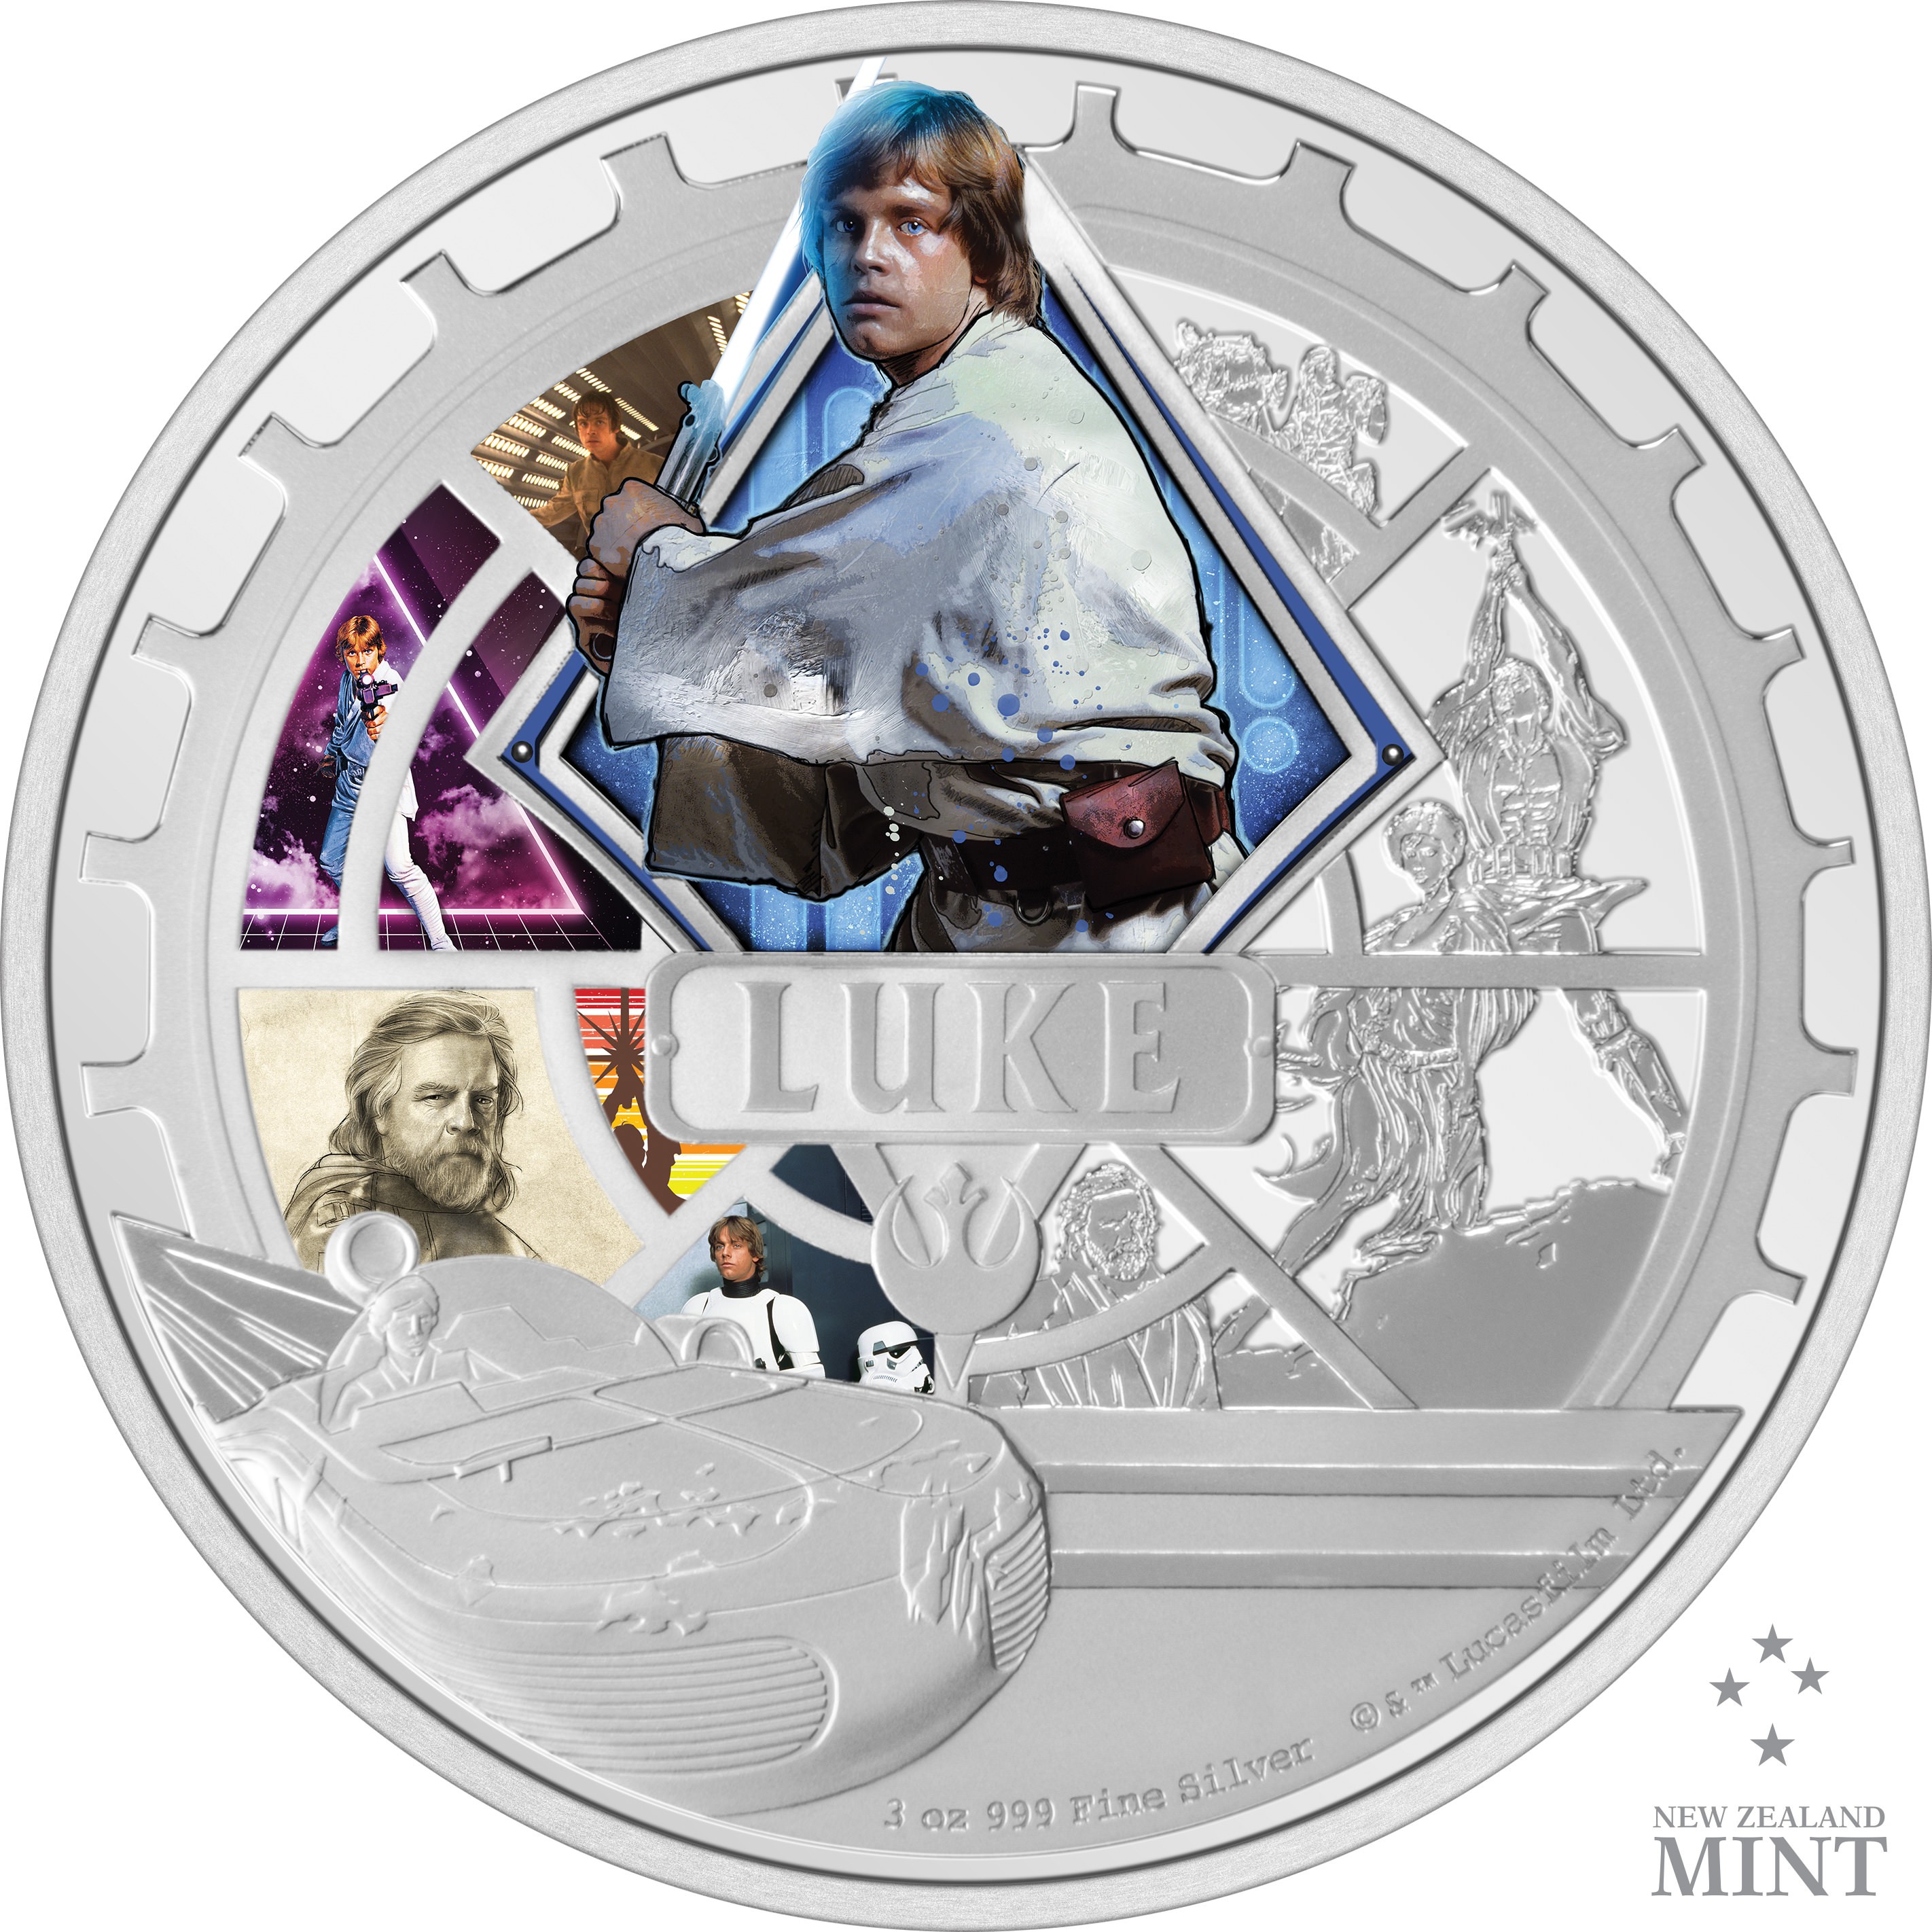 Luke Skywalker™ 3oz Silver Coin (Prototype Shown) View 3